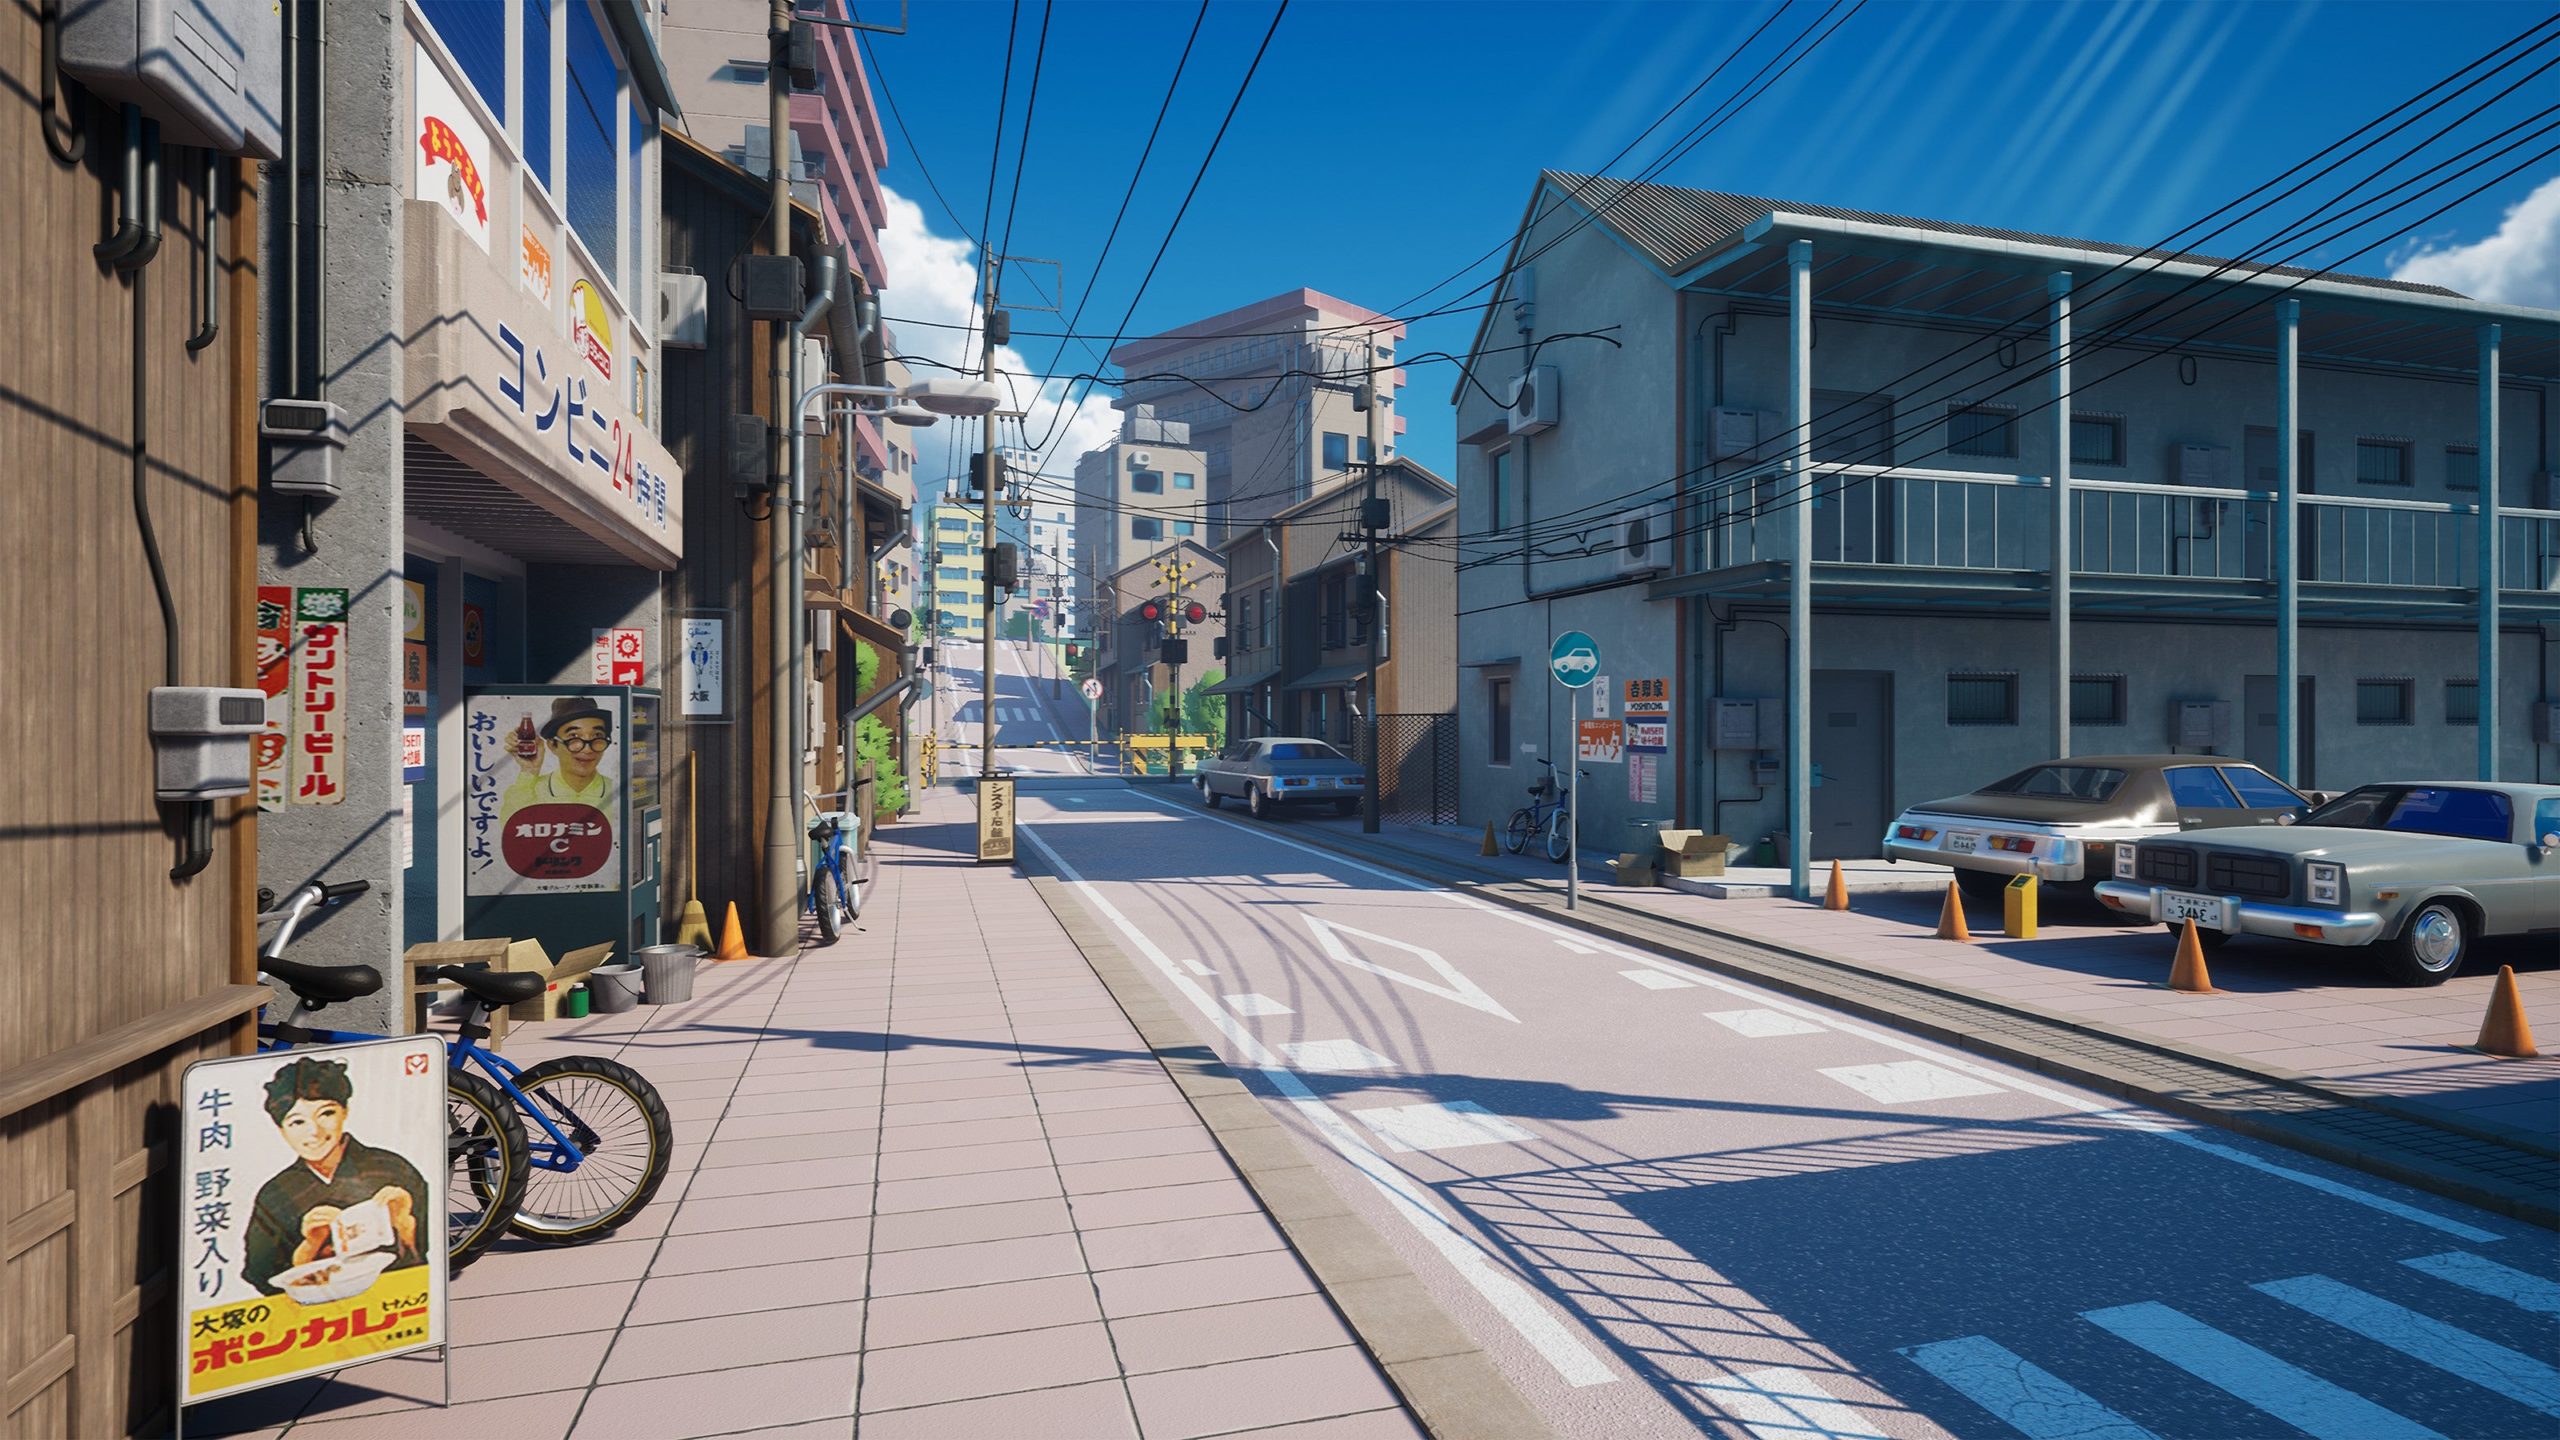 Anime Small Town Street Scene